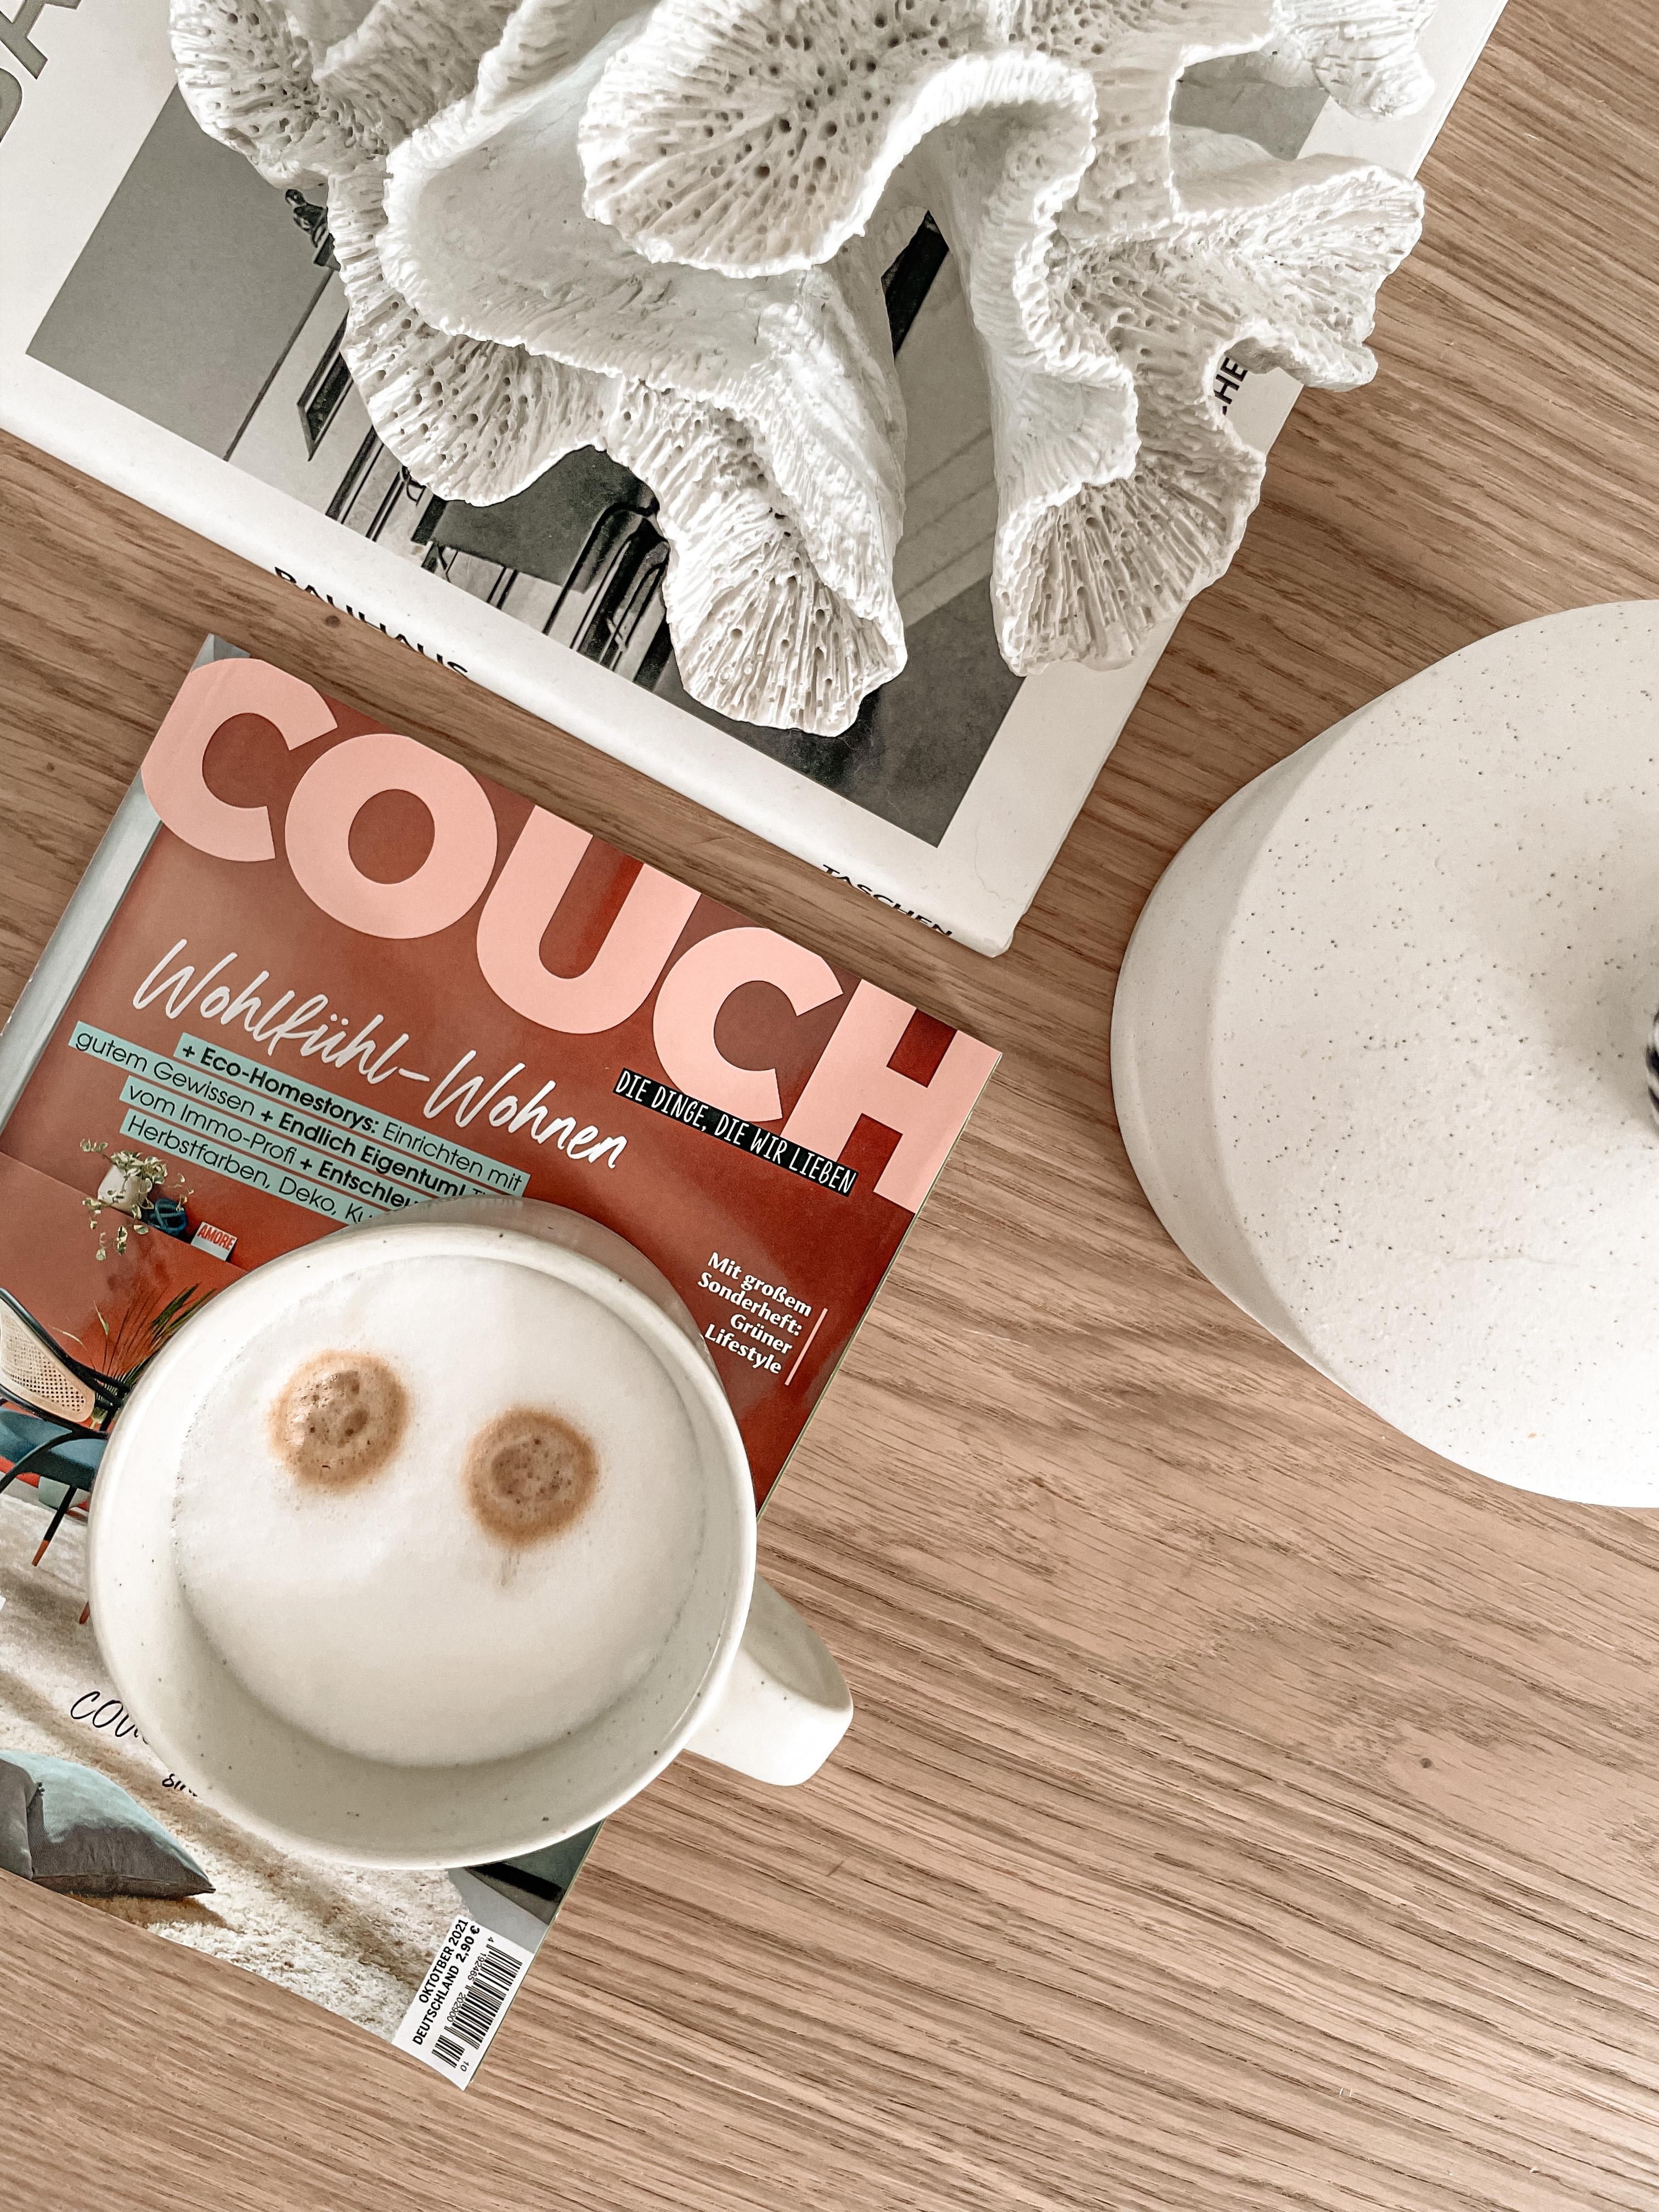 Kleine Auszeit ✨☕️📖 
#goodmoring #couchmagazin #coffeetime #timeout #relax #home #wohnen #couchstyle #couch #coffee